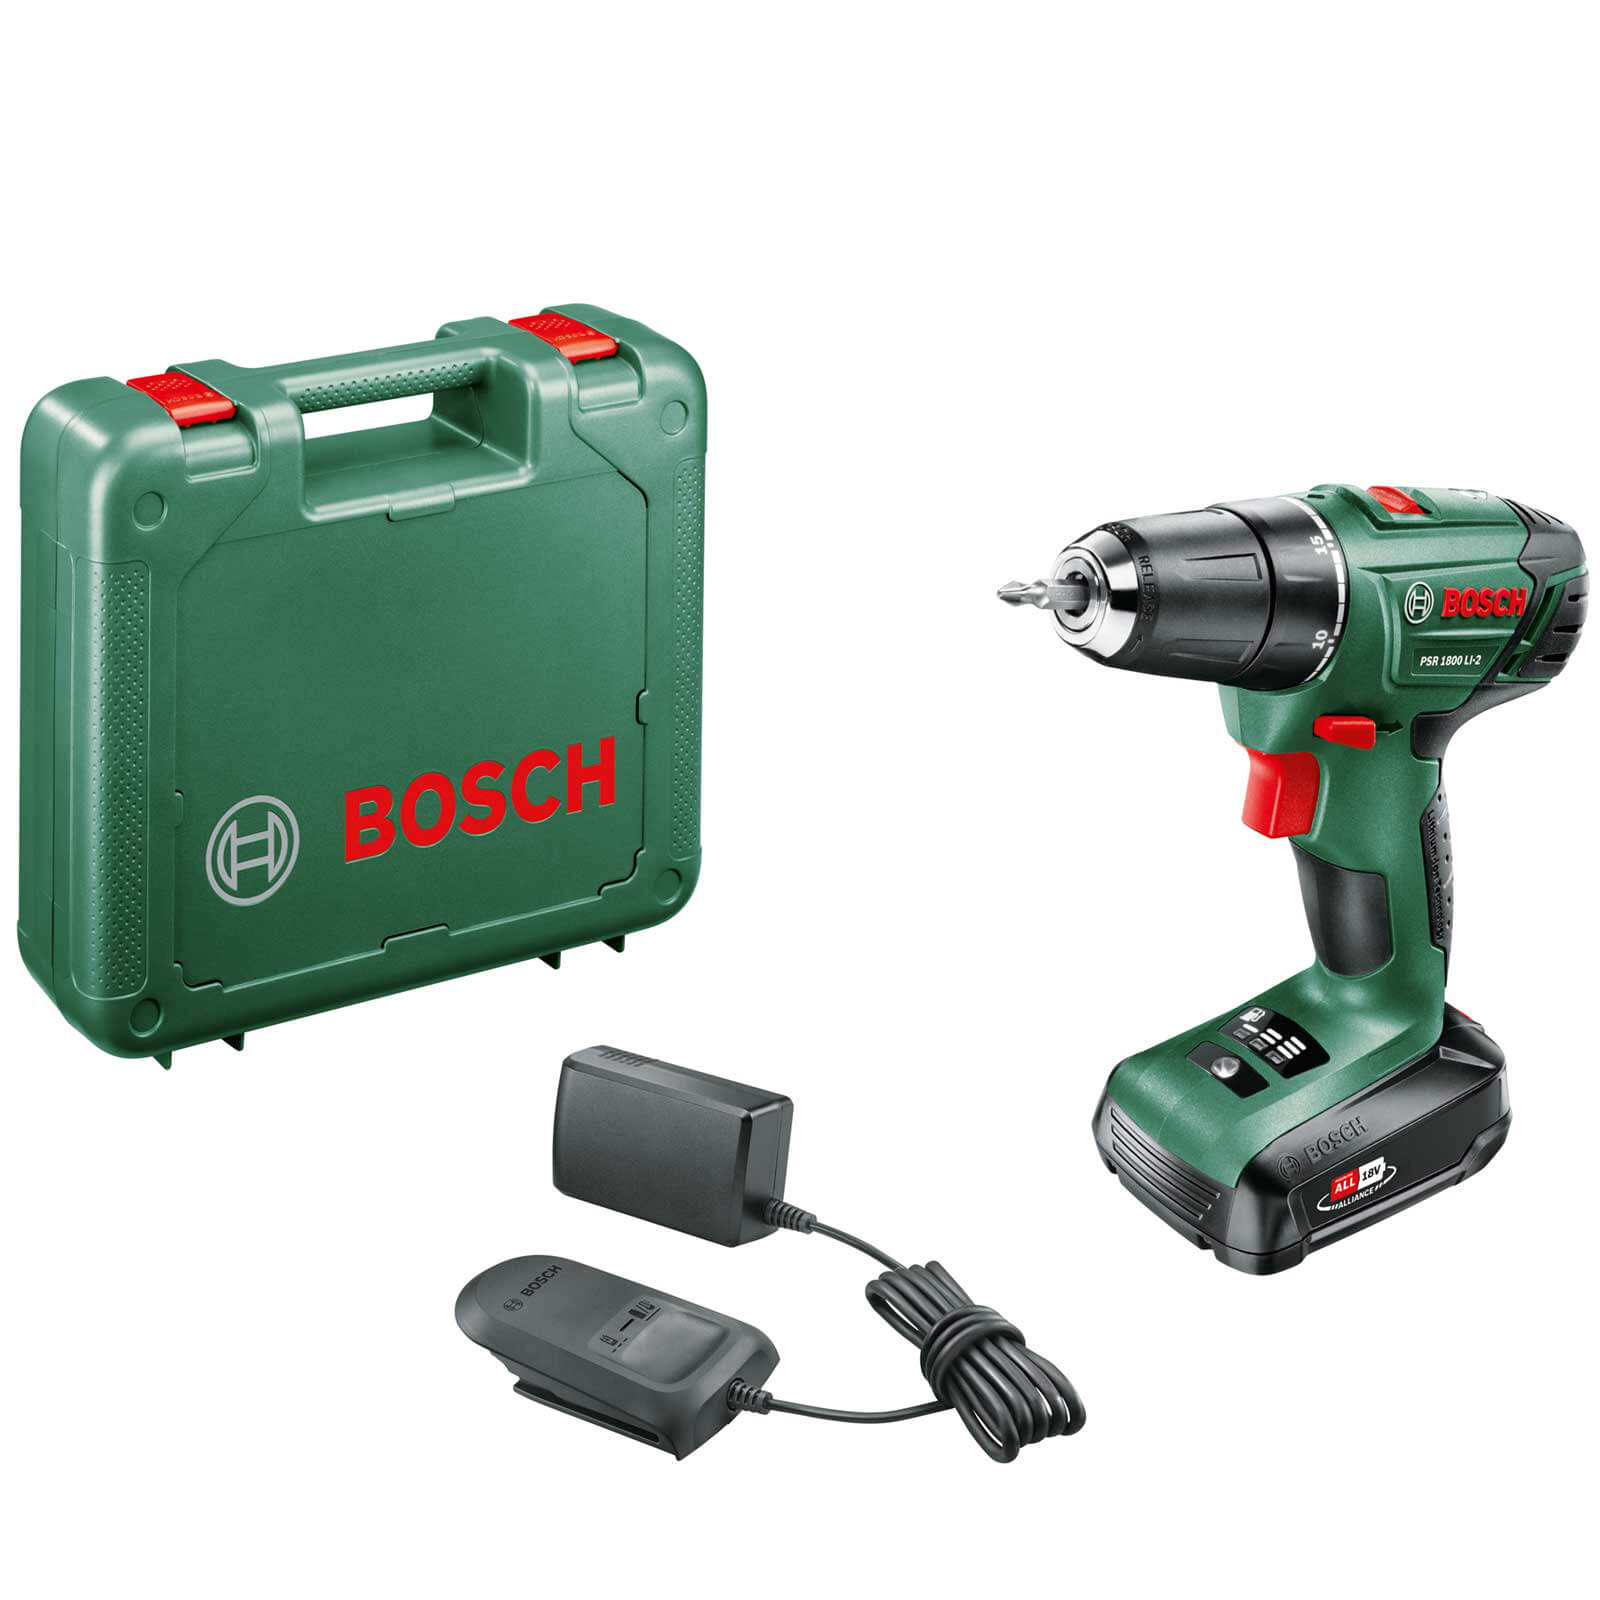 Image of Bosch PSR 1800 LI-2 18v Cordless Drill Driver 1 x 2.5ah Li-ion Charger Case